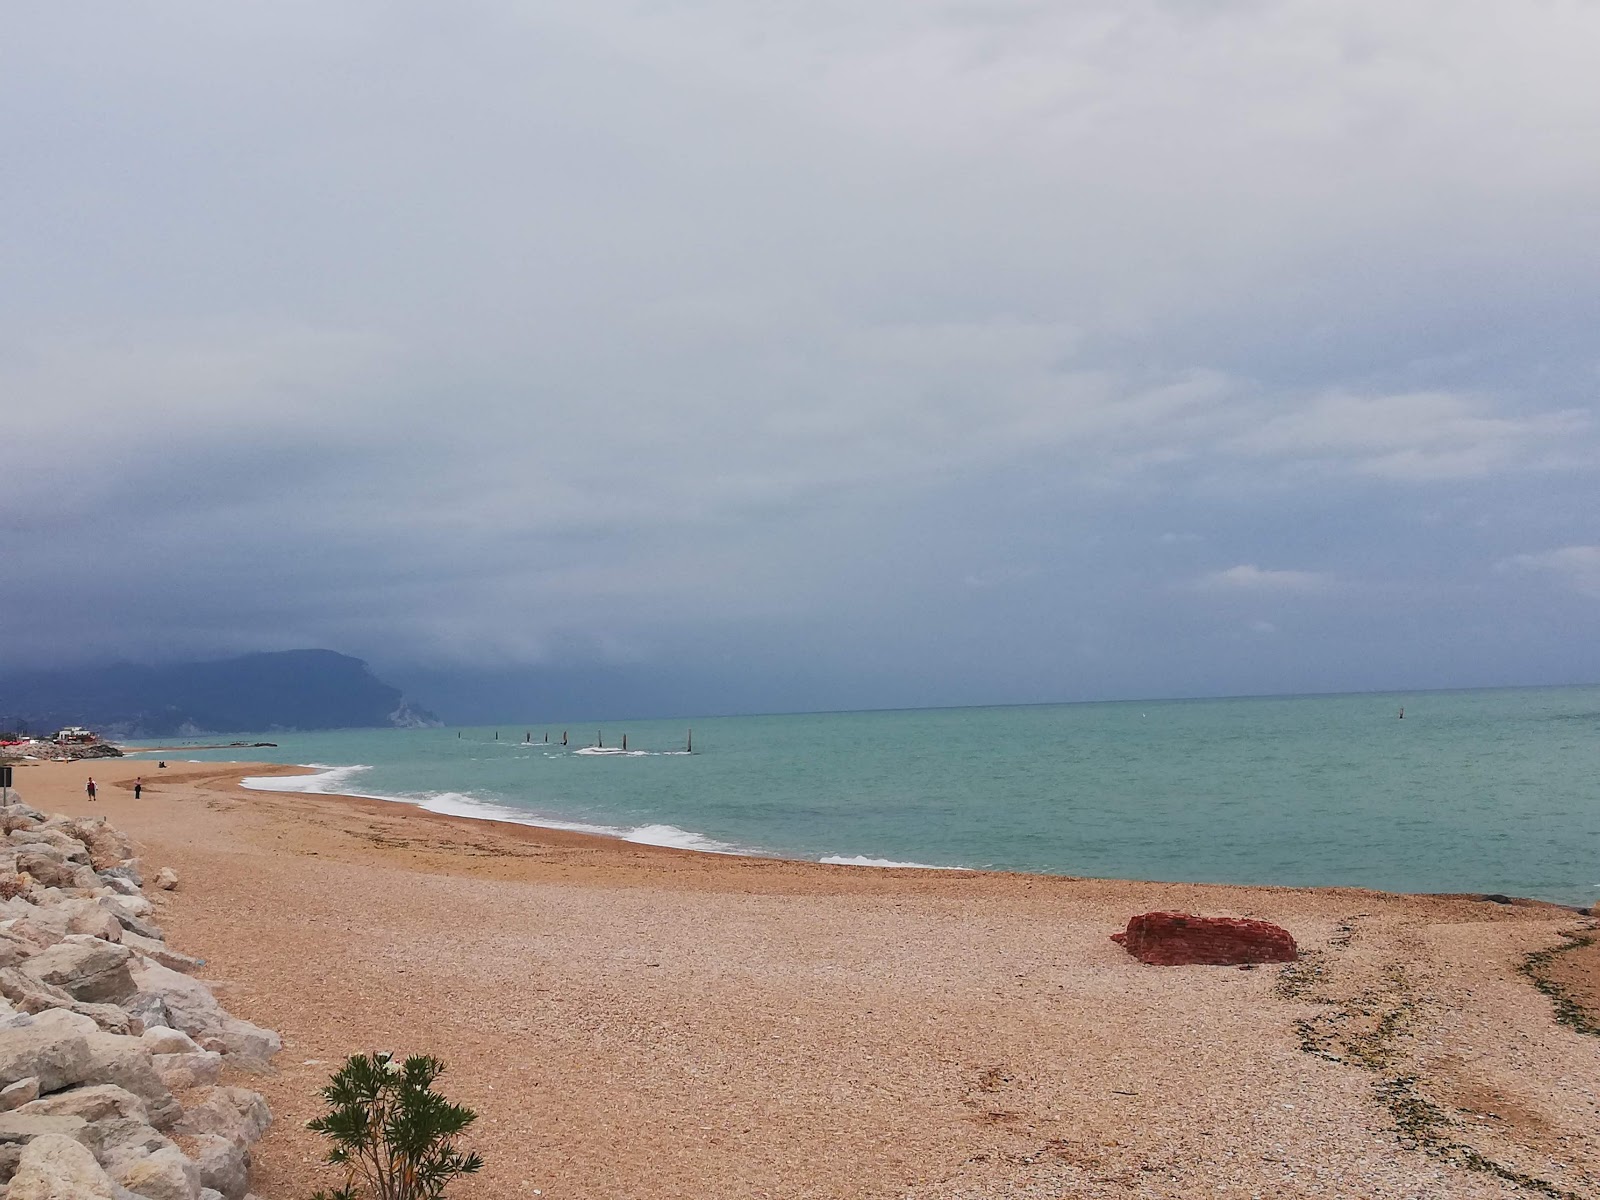 Spiaggia della Montecatini'in fotoğrafı geniş plaj ile birlikte